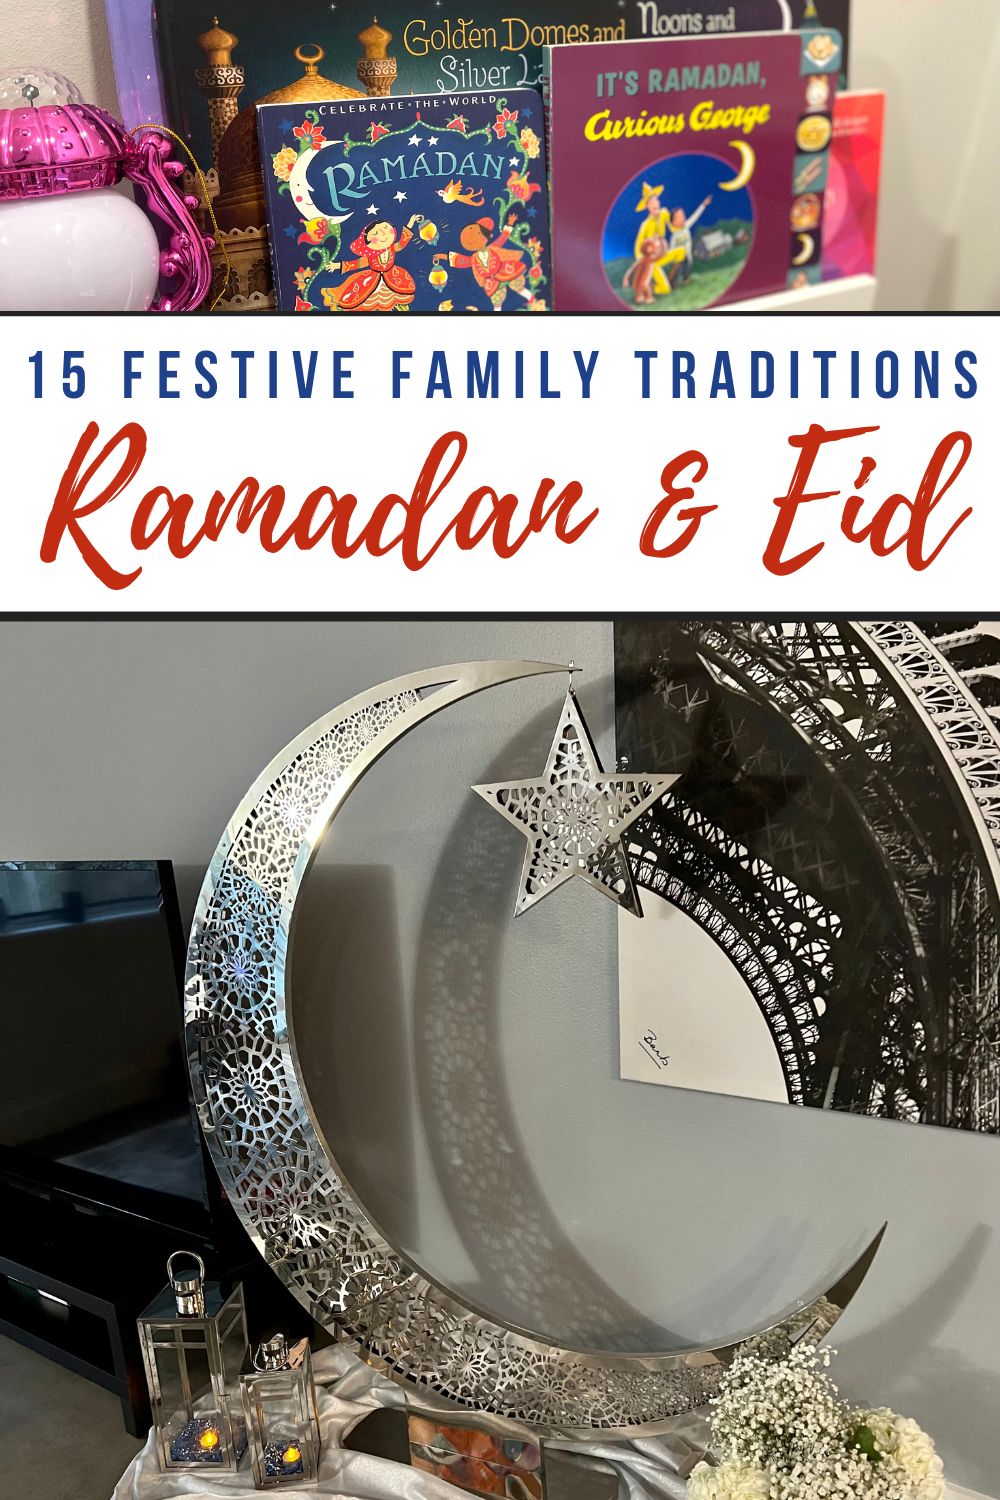 9 Eid decoration ideas to celebrate the end of Ramadan